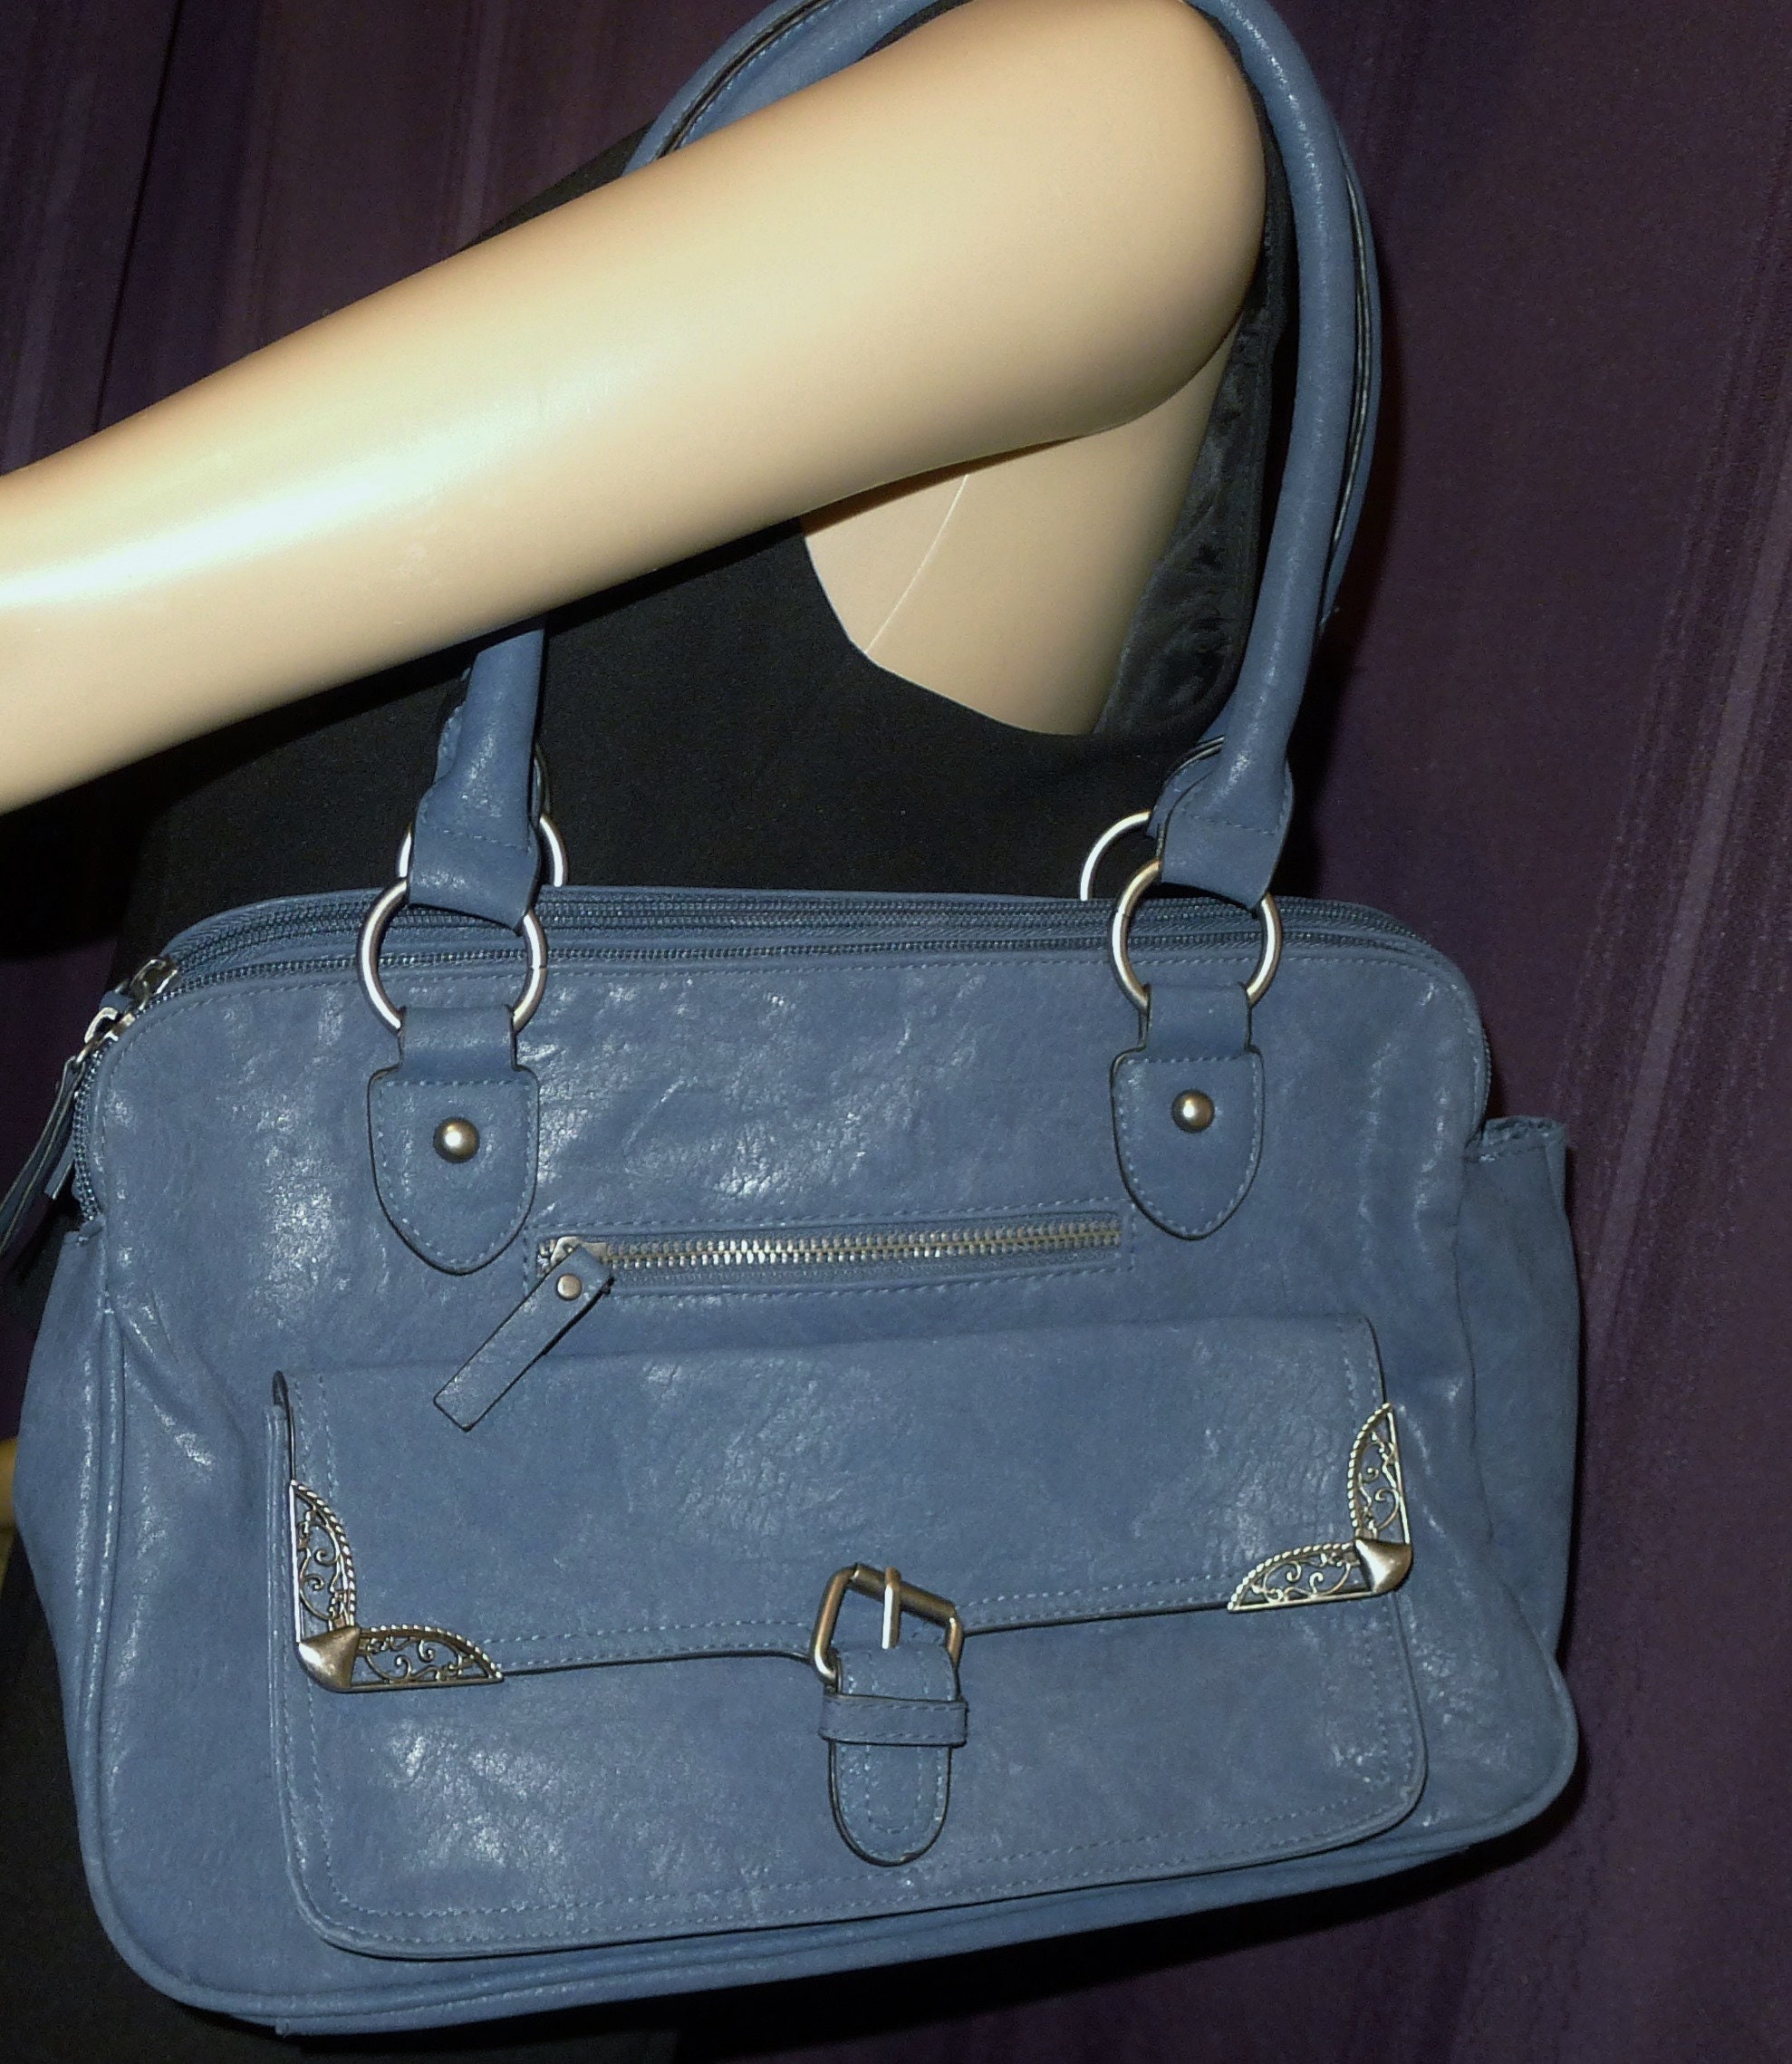 Women's Handbags & Accessories: Purses, Wallets, Sunglasses & More |  Boscov's